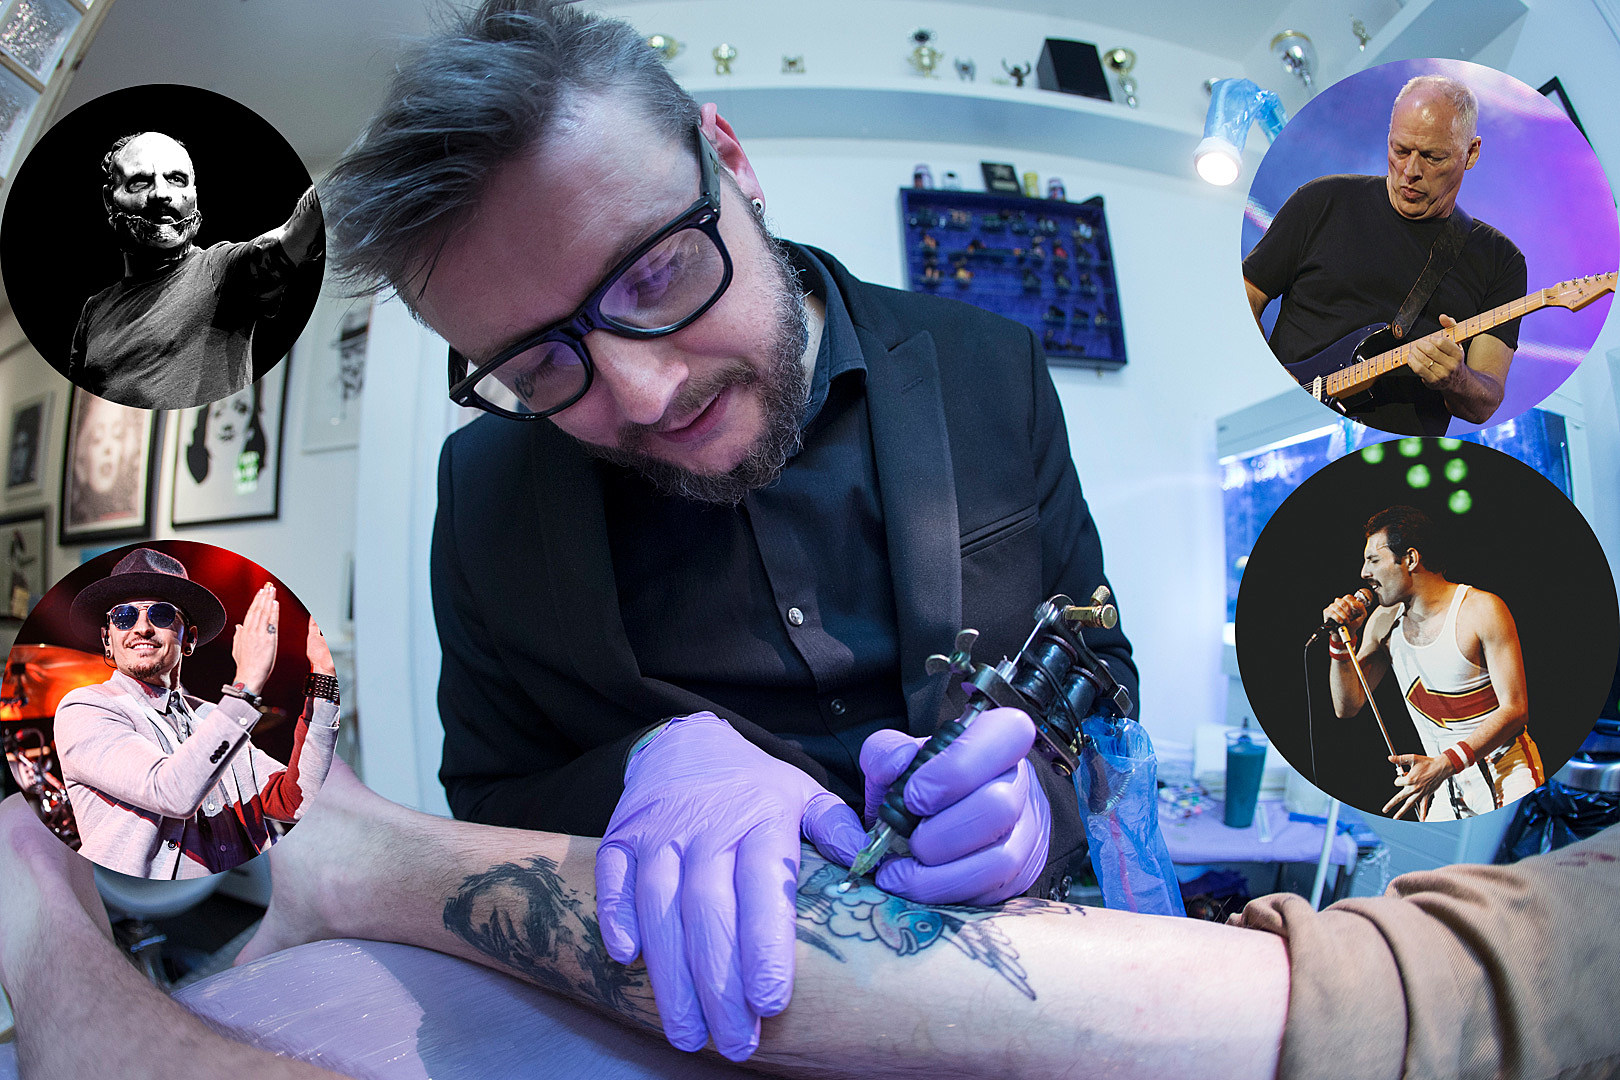 Slipknot thigh tattoo done by Marko at Liquor n Ink, England. : r/tattoos